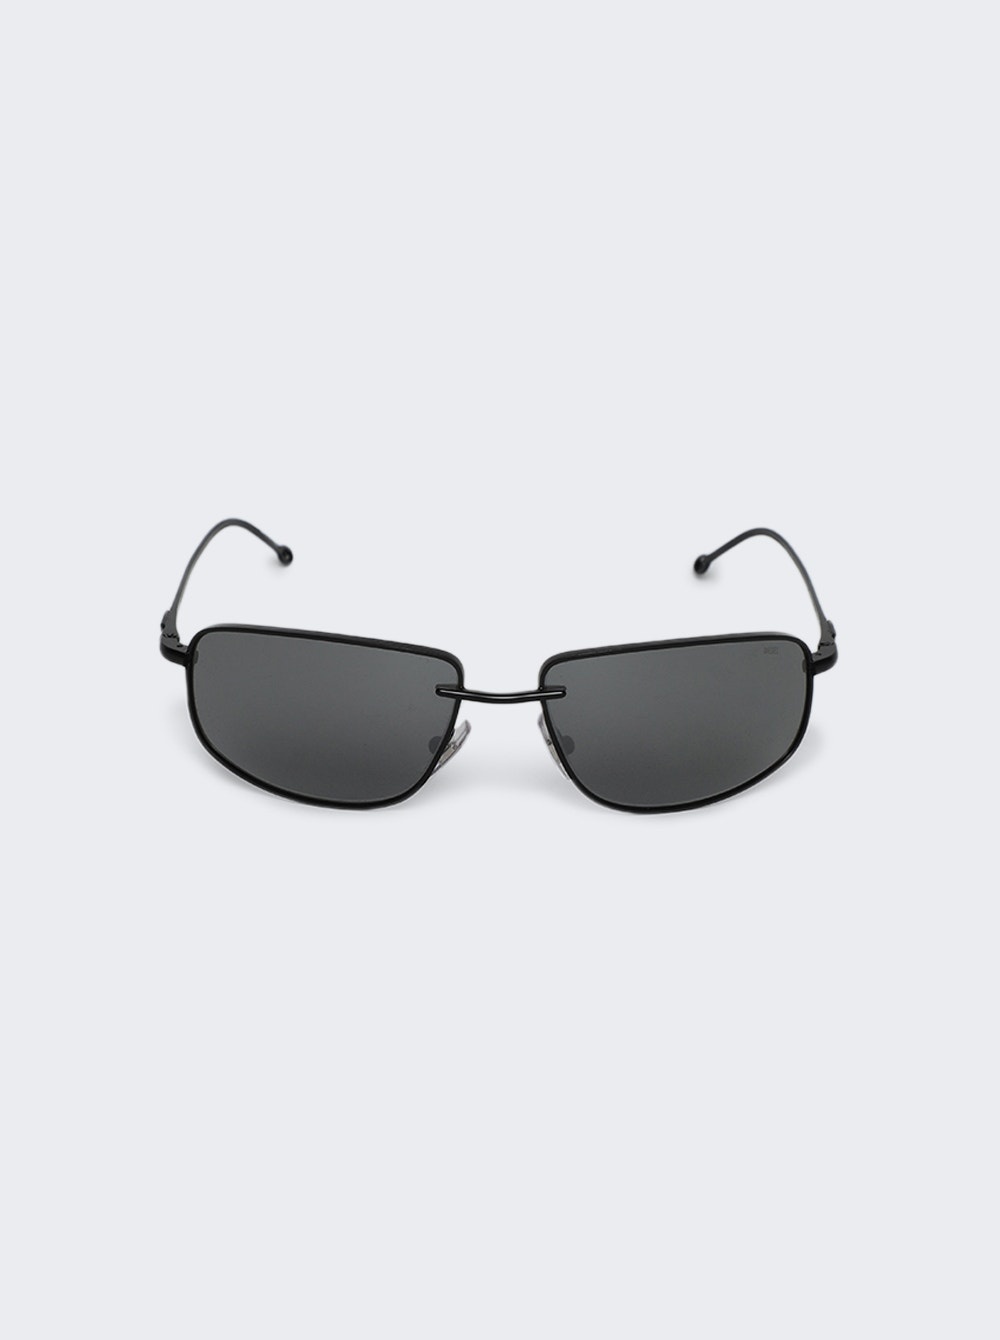 Lx1005 Sunglasses Matte Black - 1